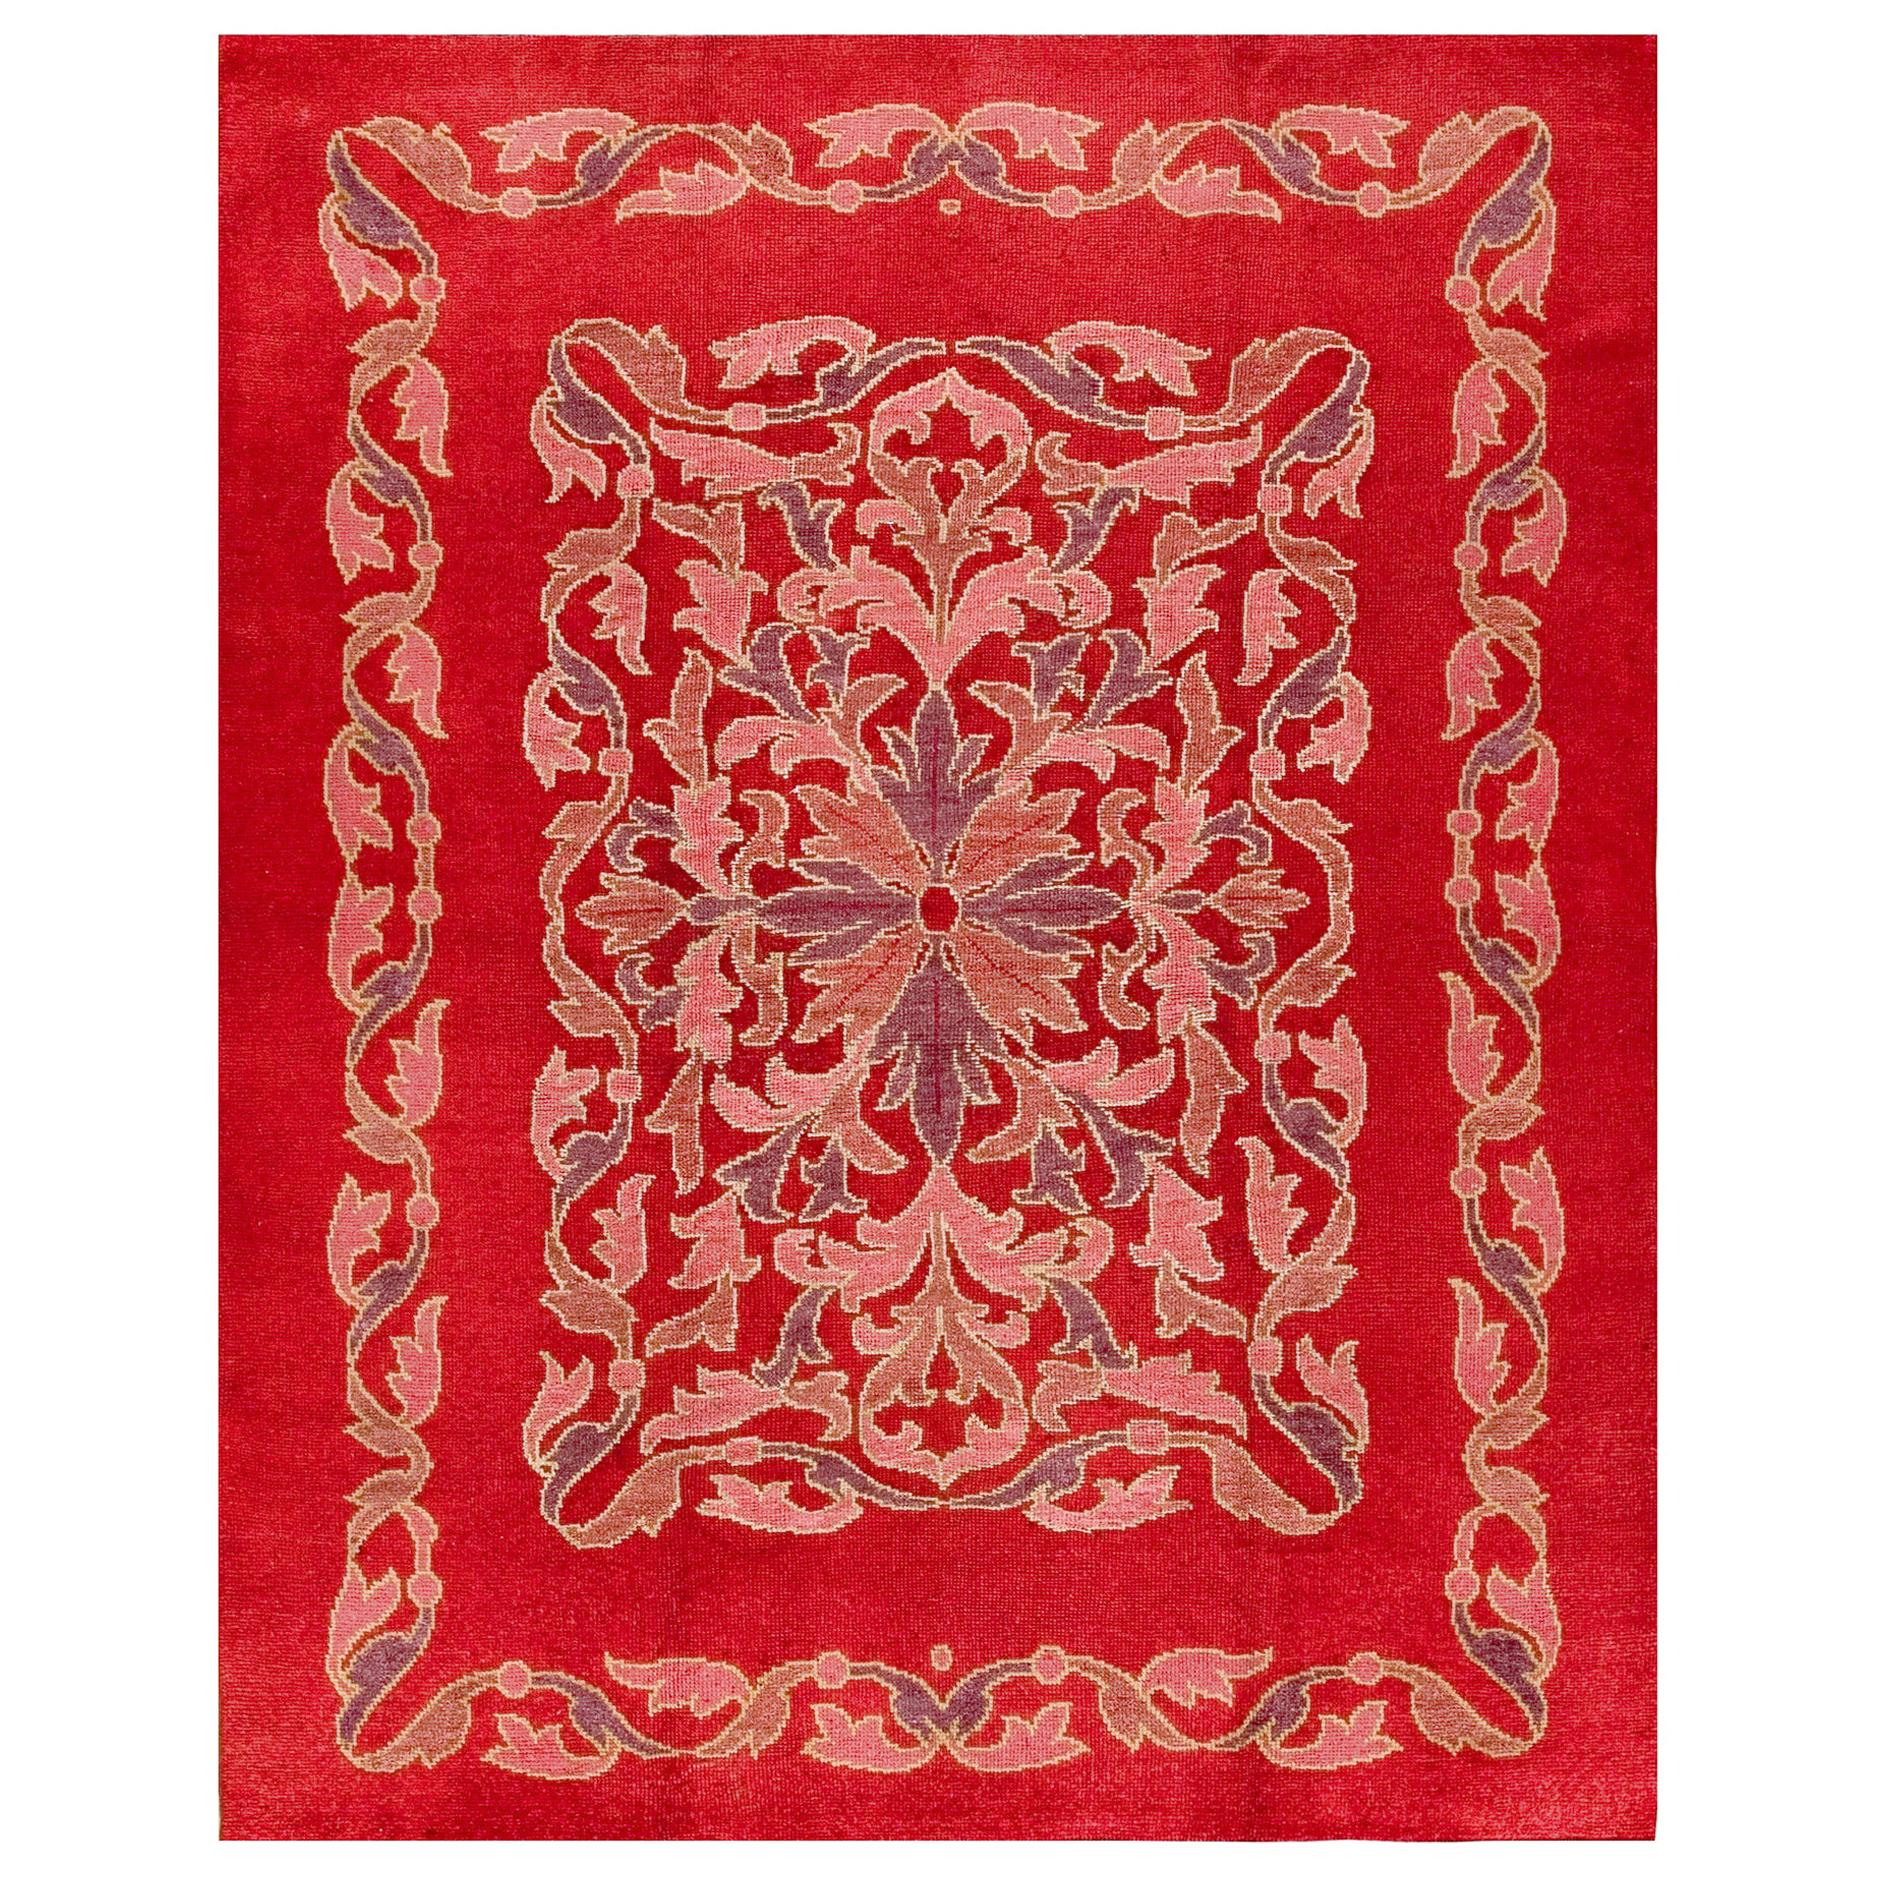 Early 20th Century Irish Donegal Arts & Crafts Carpet ( 7'8" x 9'8" - 234 x 295)